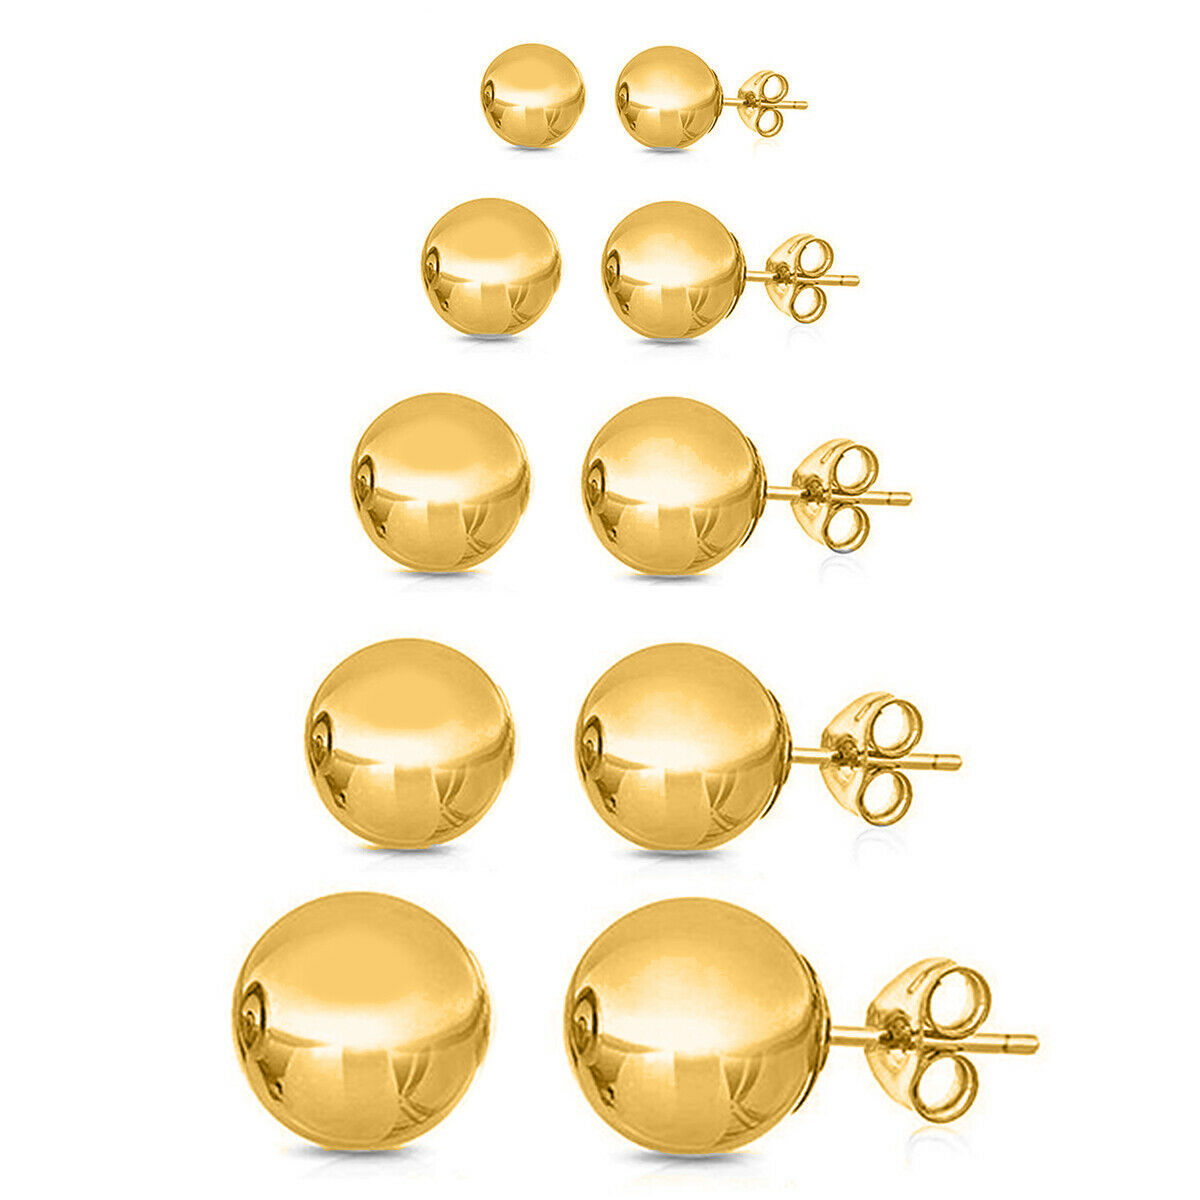 14K Yellow Gold Ball Stud Earrings - Gold - 3mm 4mm 5mm 6mm 7mm 8mm